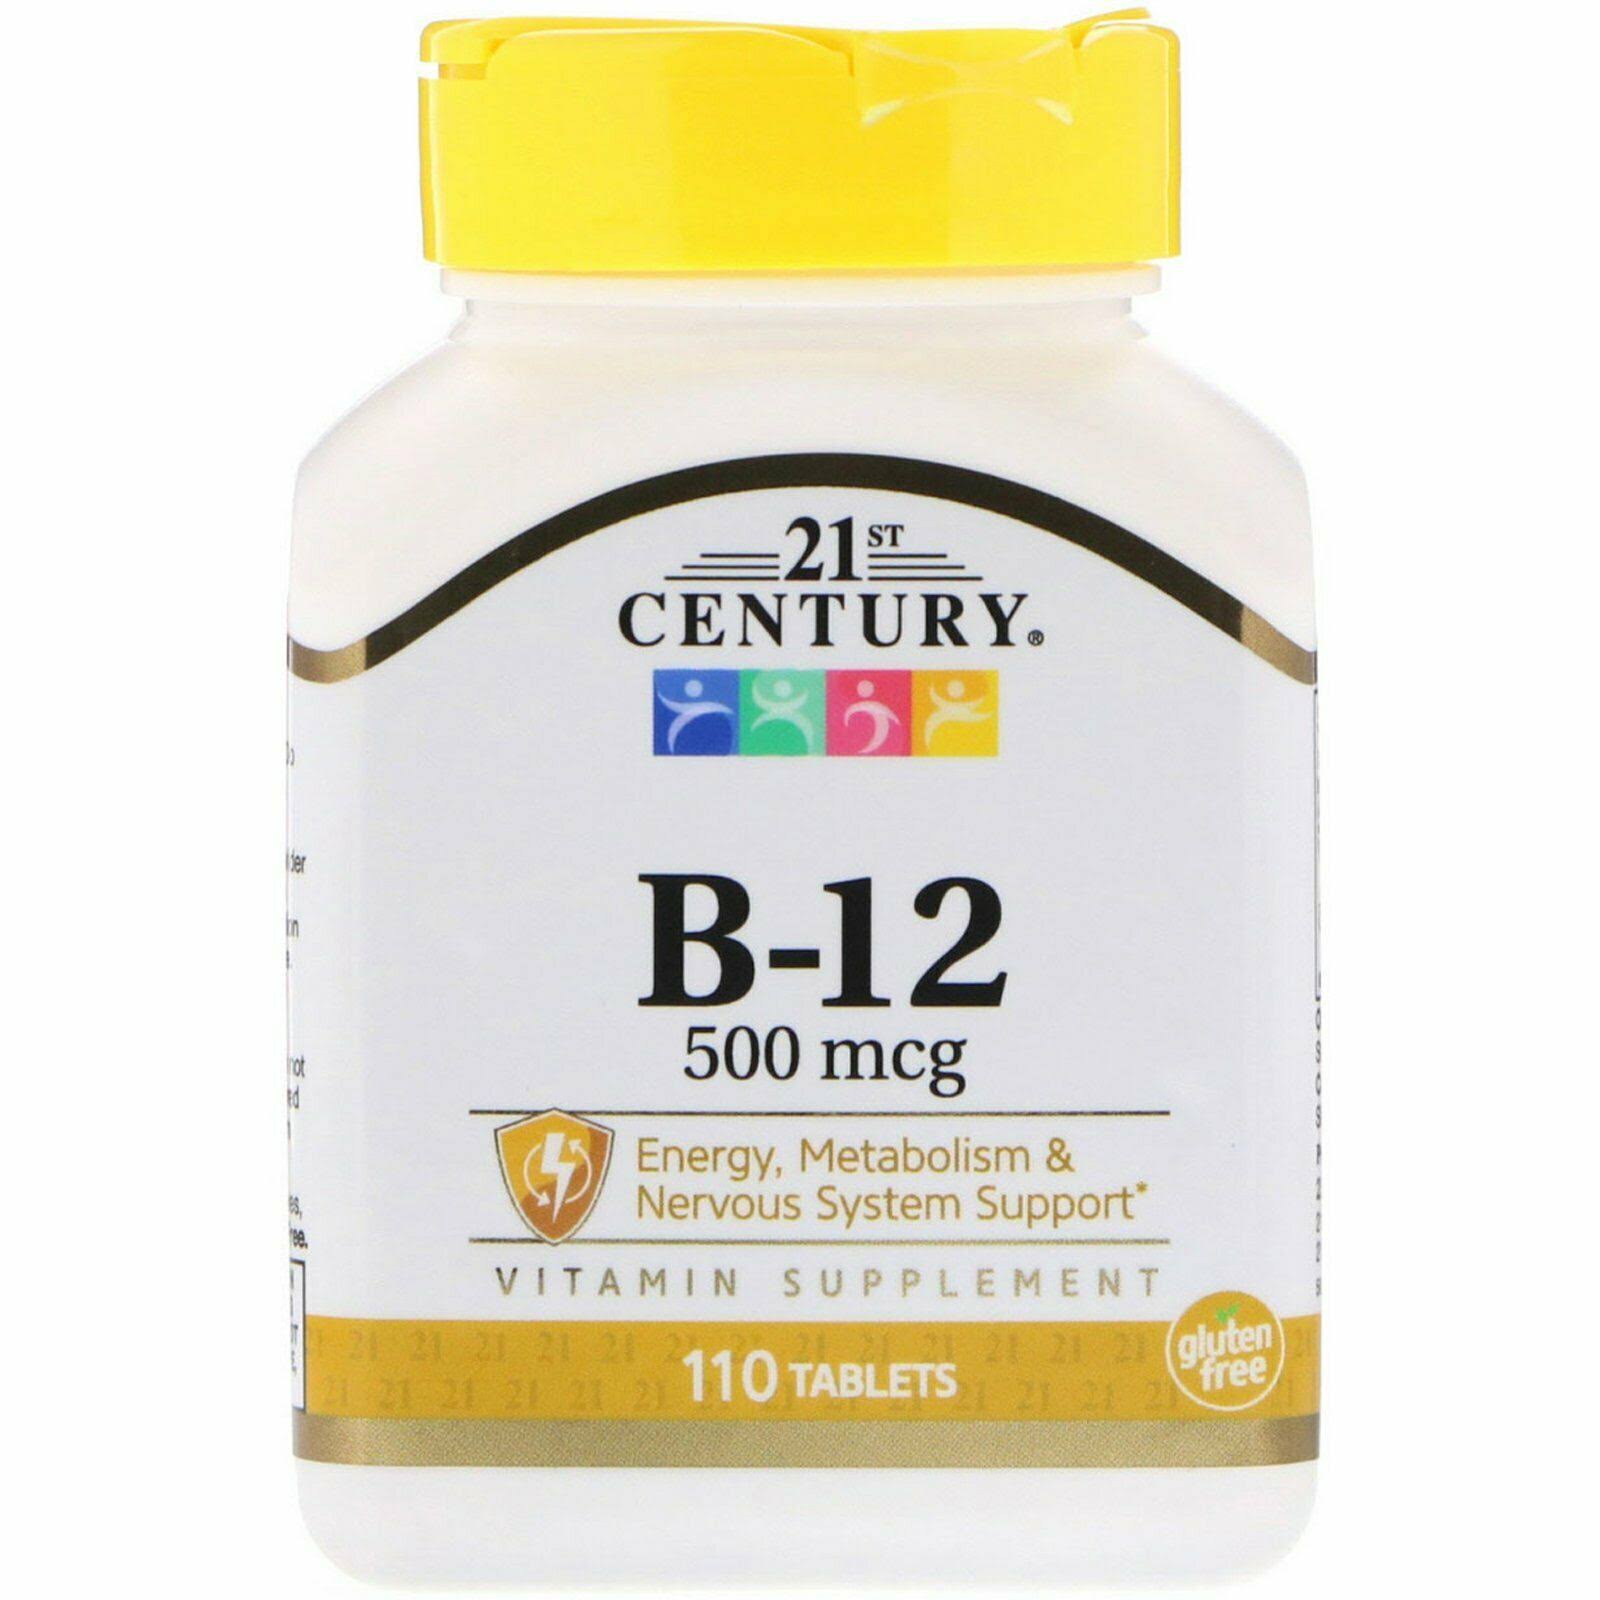 21st Century Vitamin B-12 Dietary Supplement - 500mcg, 110 Tablets